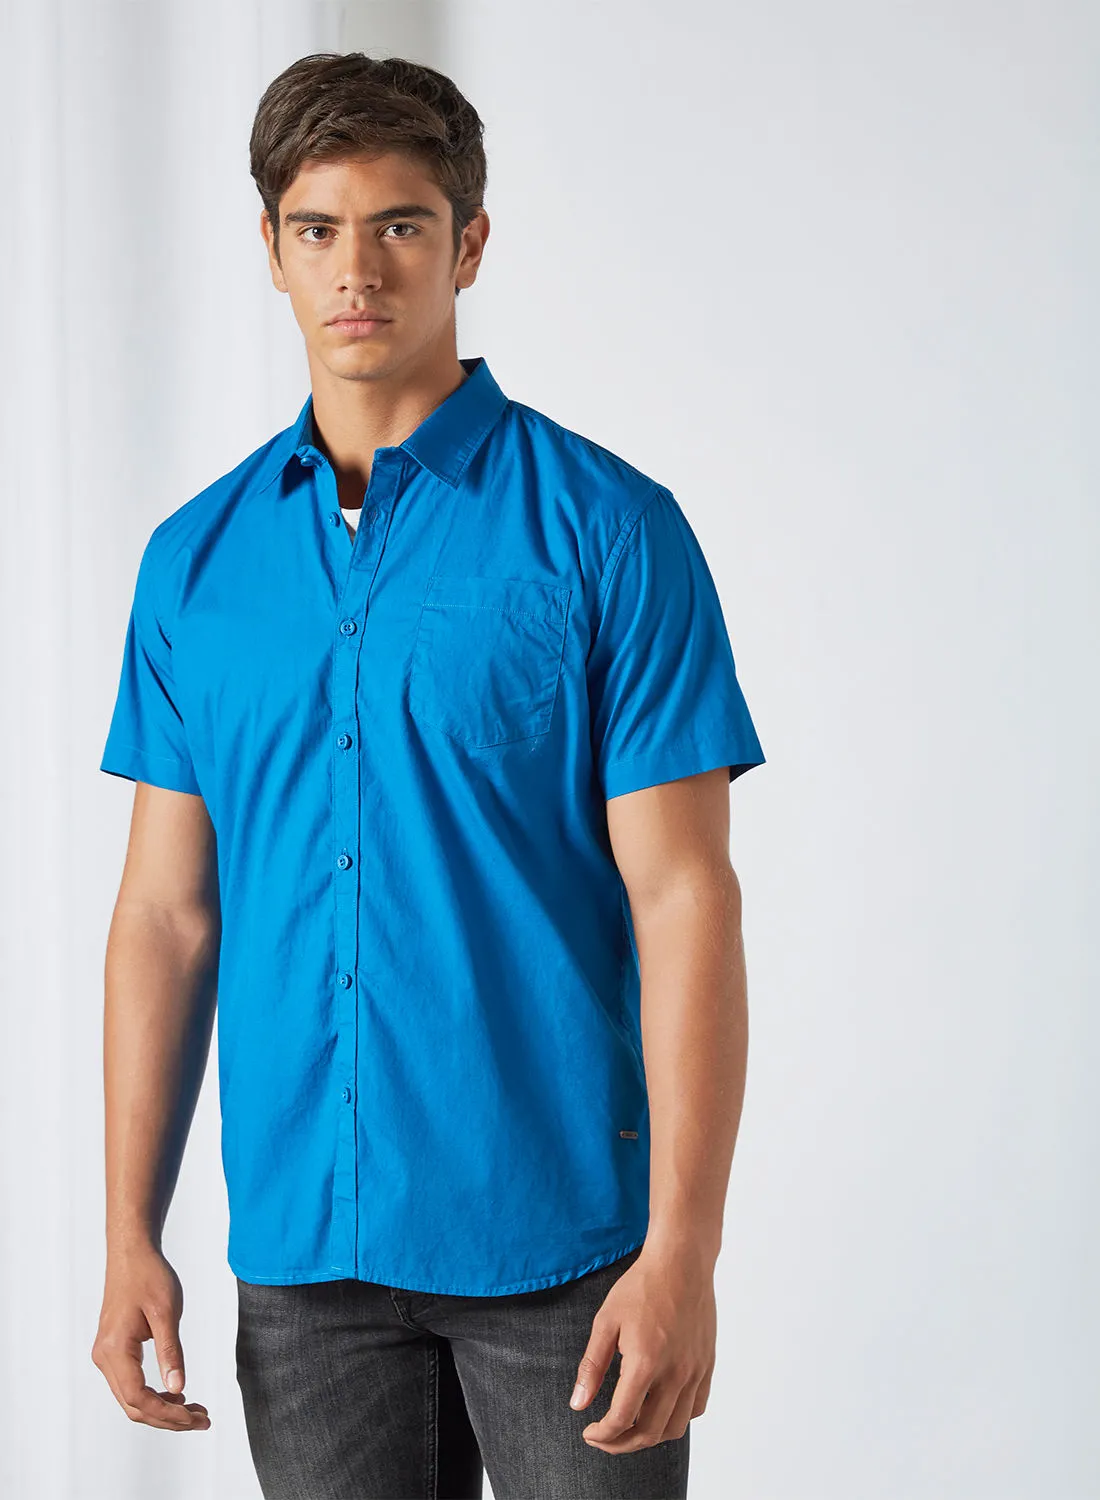 ABOF Men's Basic Short Sleeve Shirt Dark Azure Blue